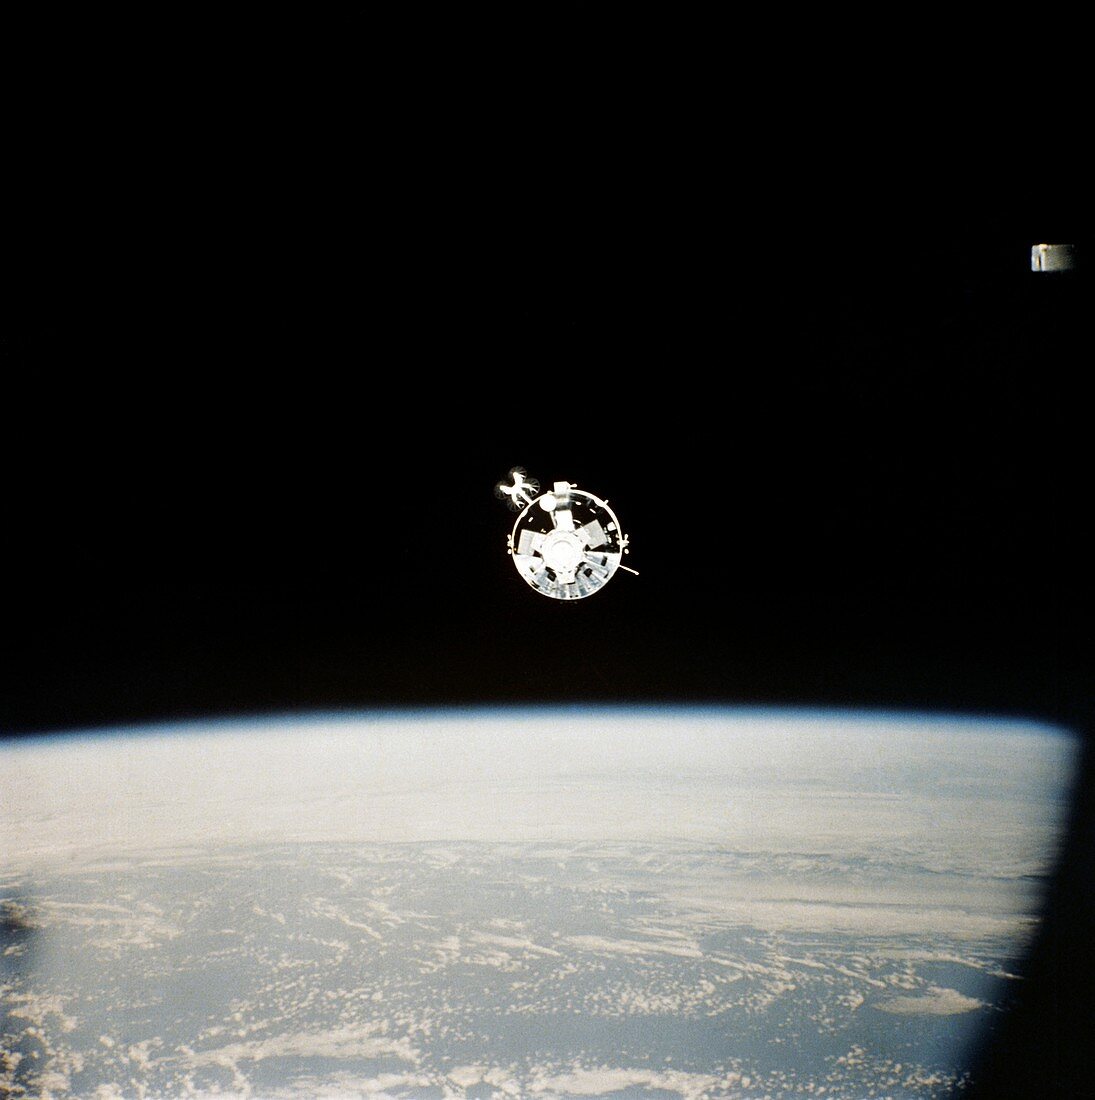 Apollo CSM-111,astronaut photograph